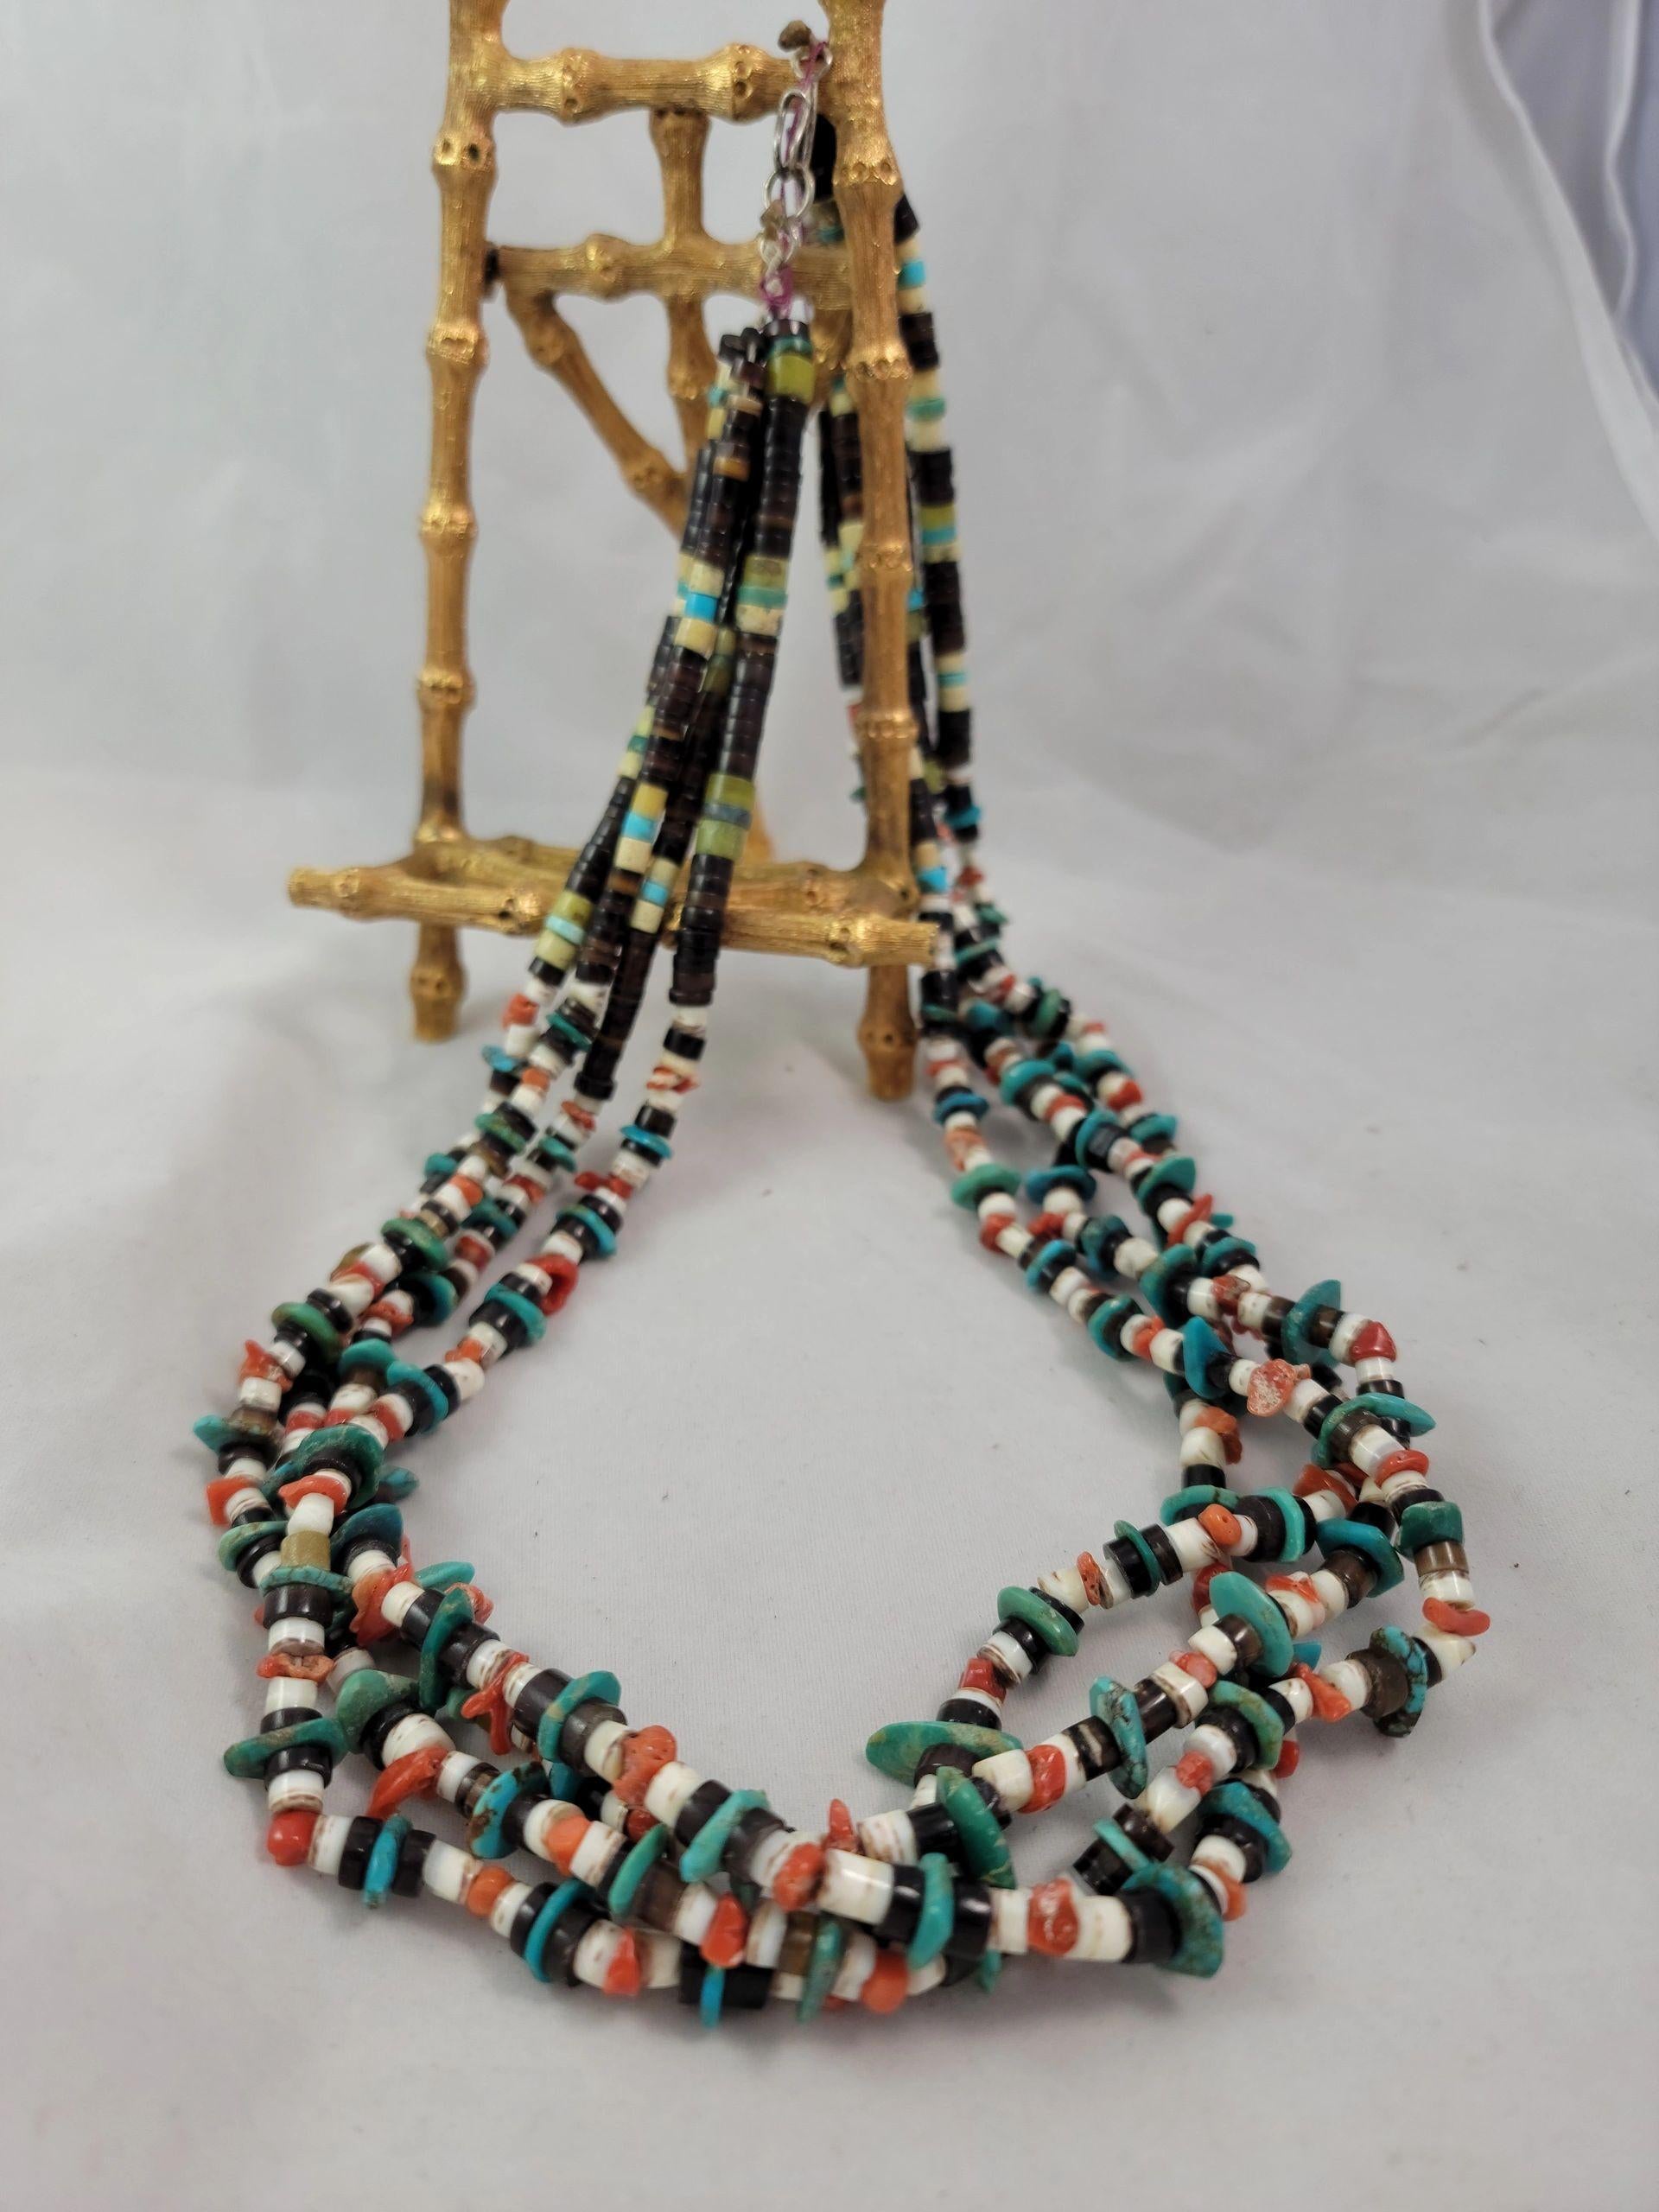 Serpentine coral turquoise necklace - Albuquerque Pawn Shop